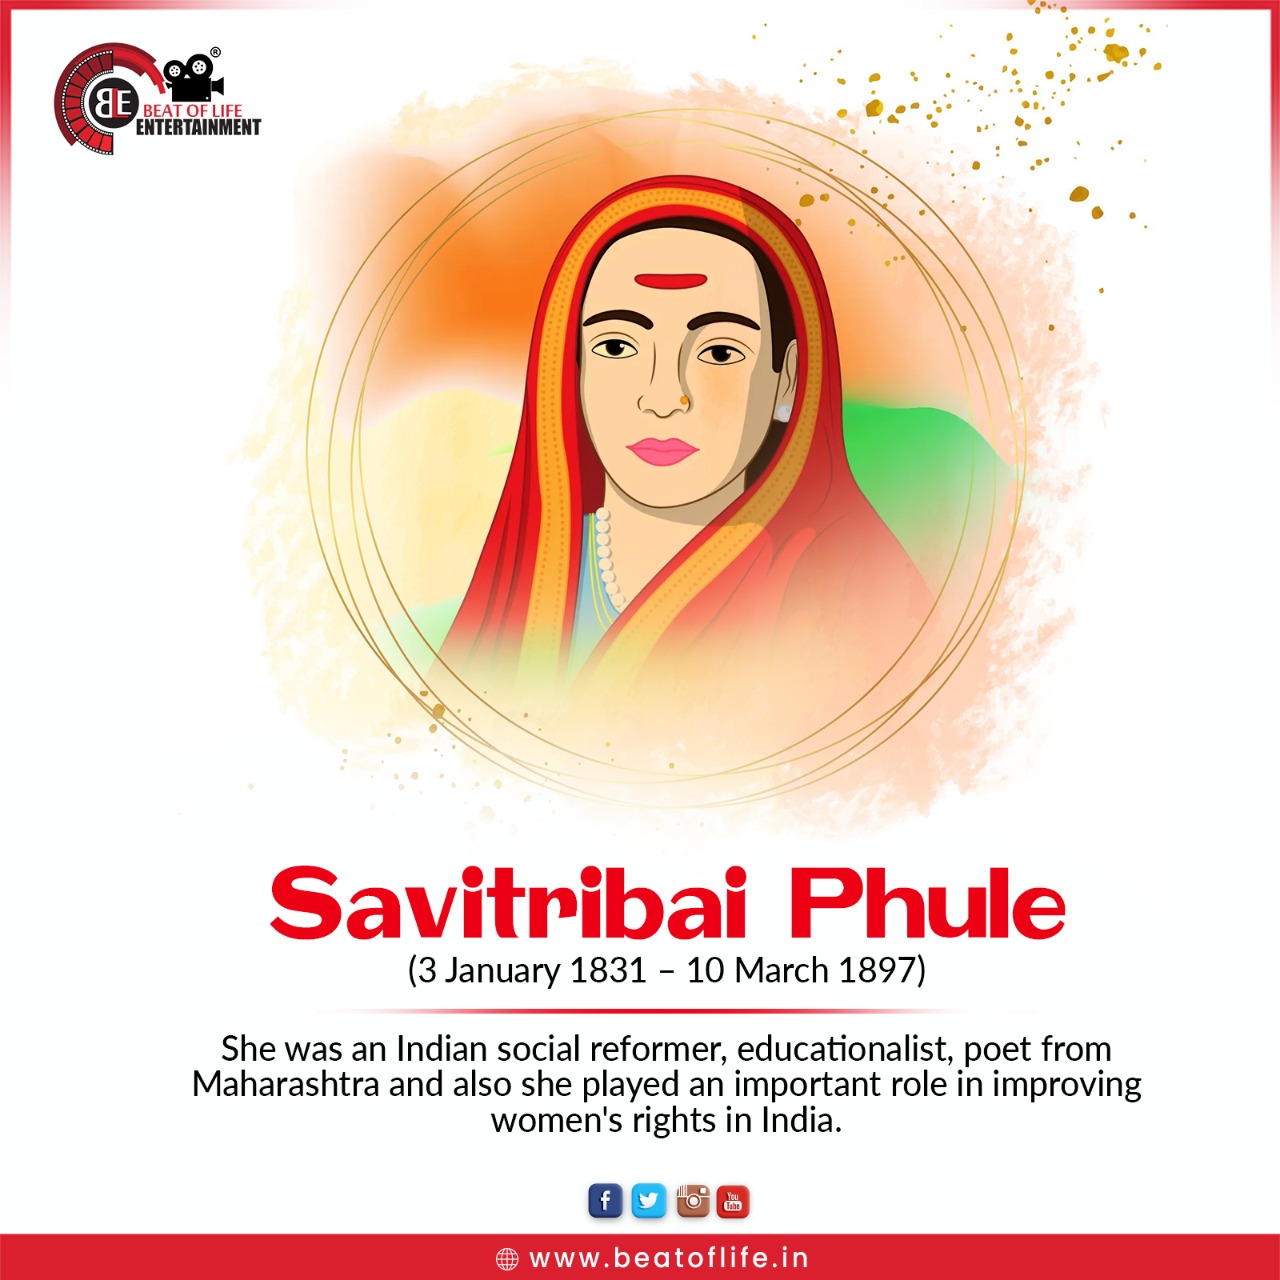 Savitribai Phule Death Anniversary